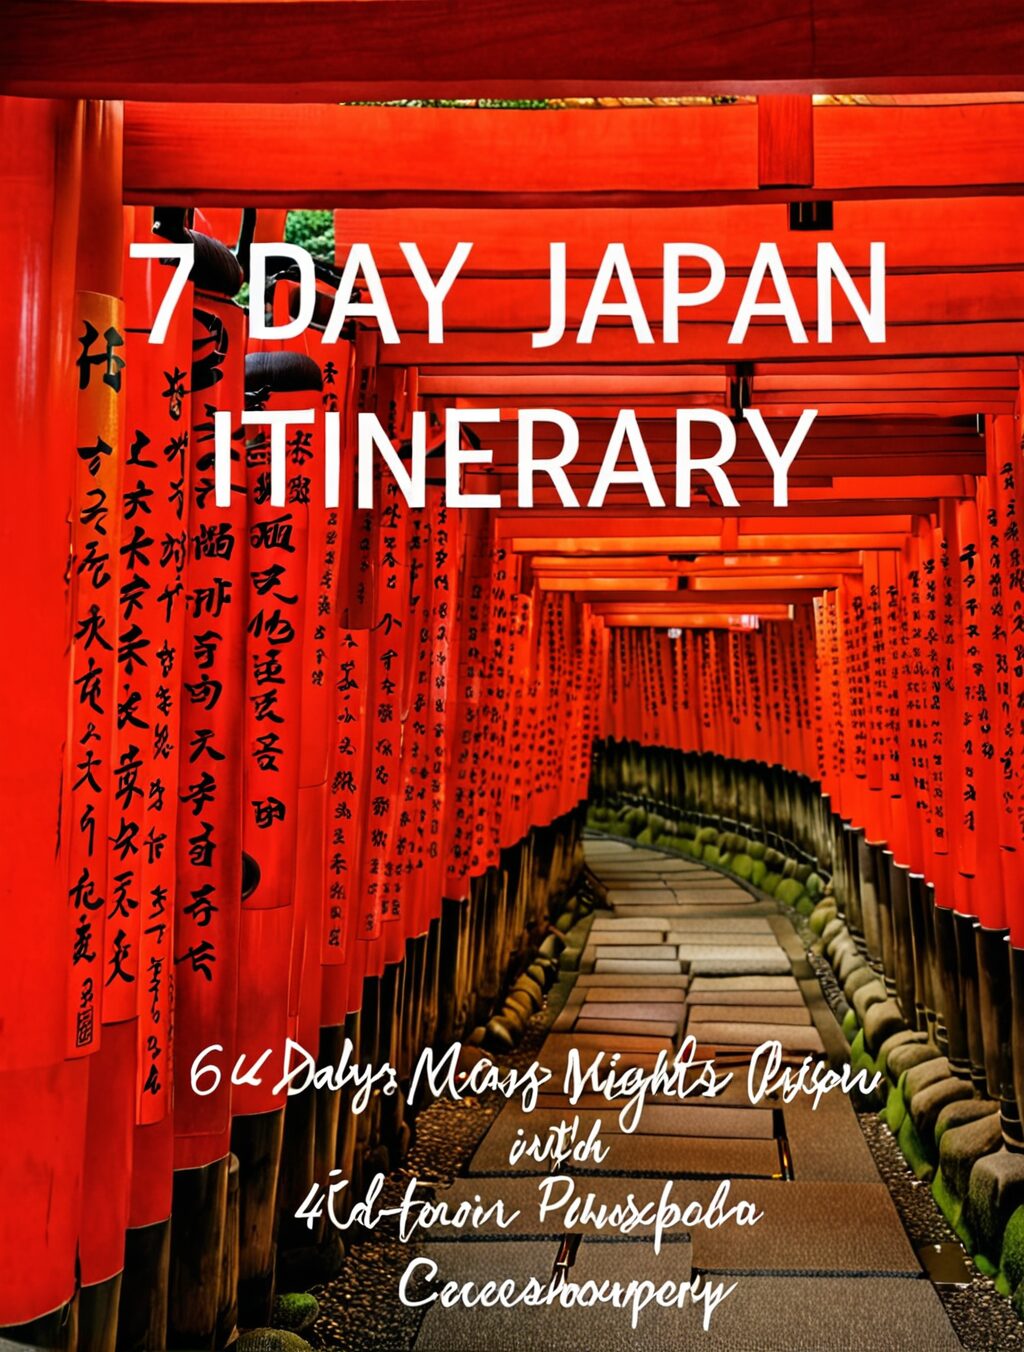 7 days 6 nights japan itinerary